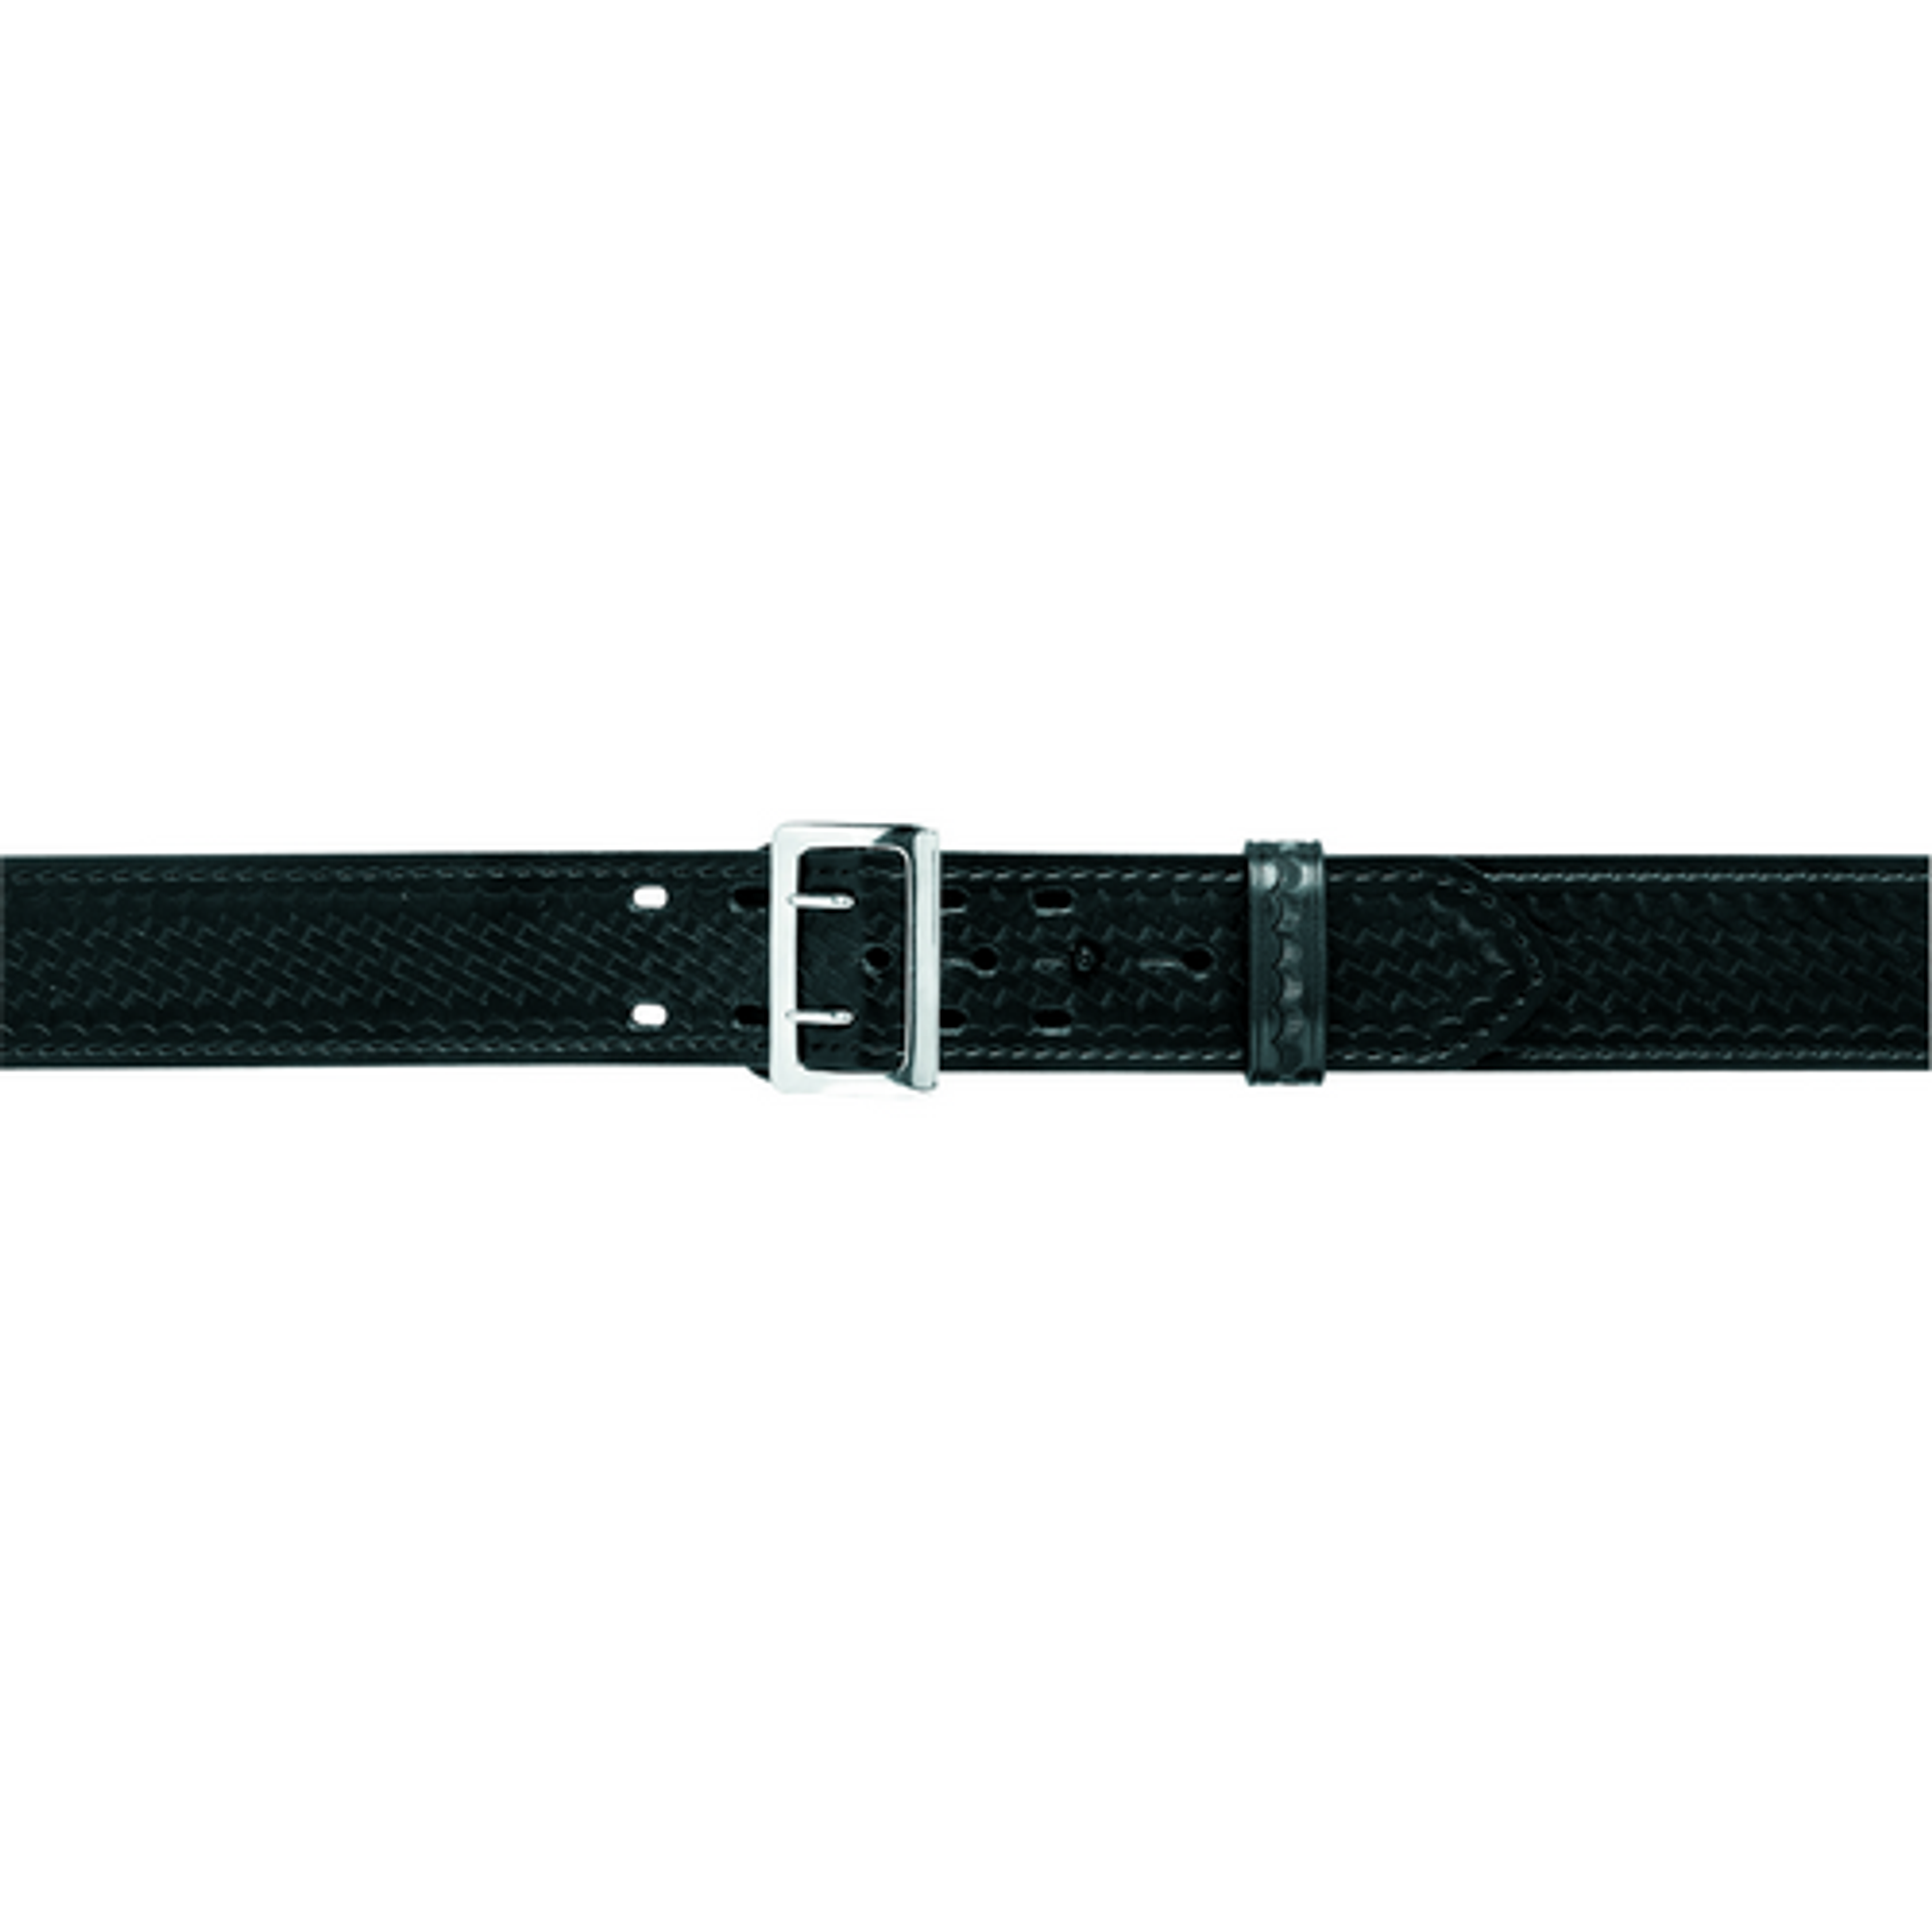 87 - Sam Browne Buckled Duty Belt, 2.25 (58mm) - KR87-44-26